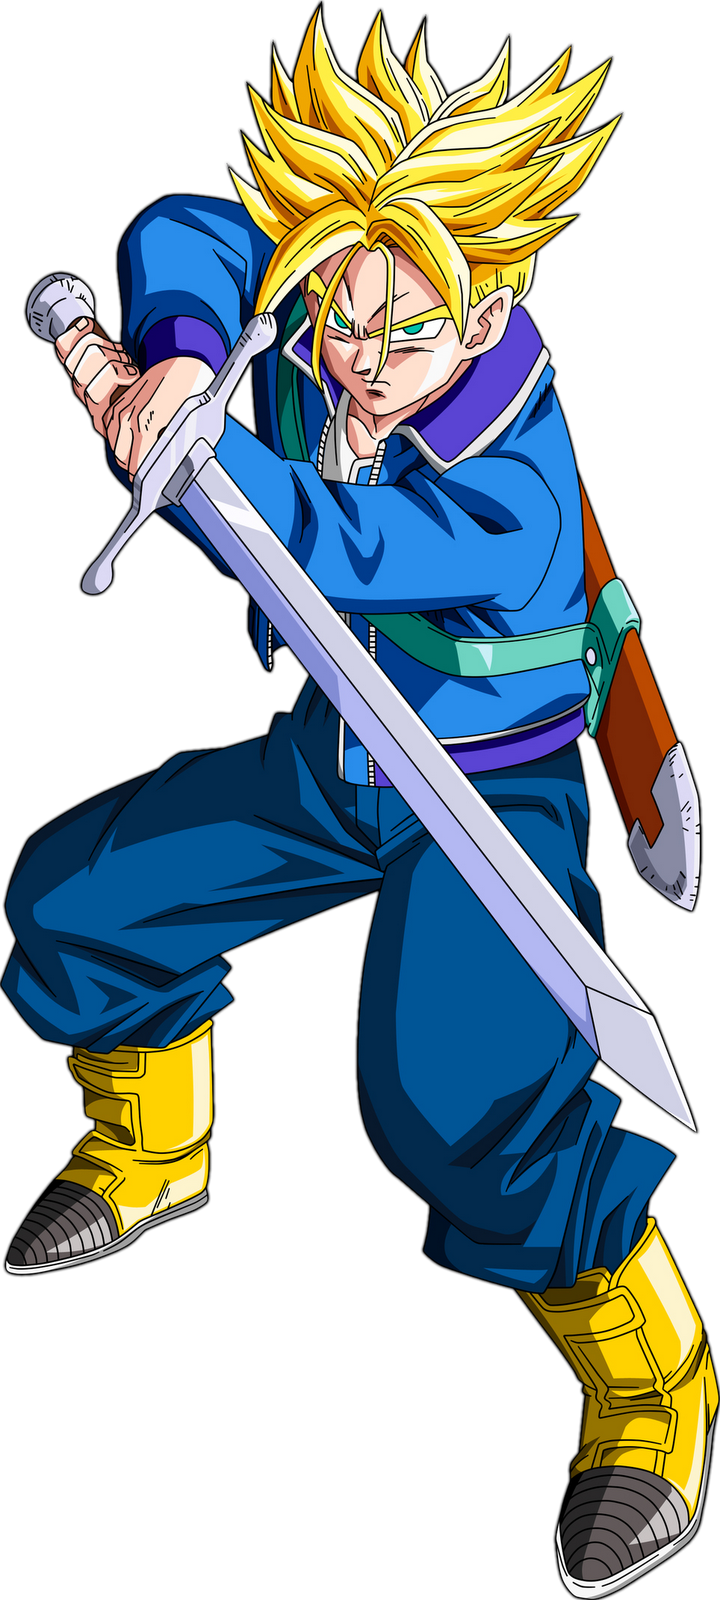 Image - Render Dragon Ball Z Trunks Do Future by zat renders.png | Heroes Wiki | FANDOM powered ...